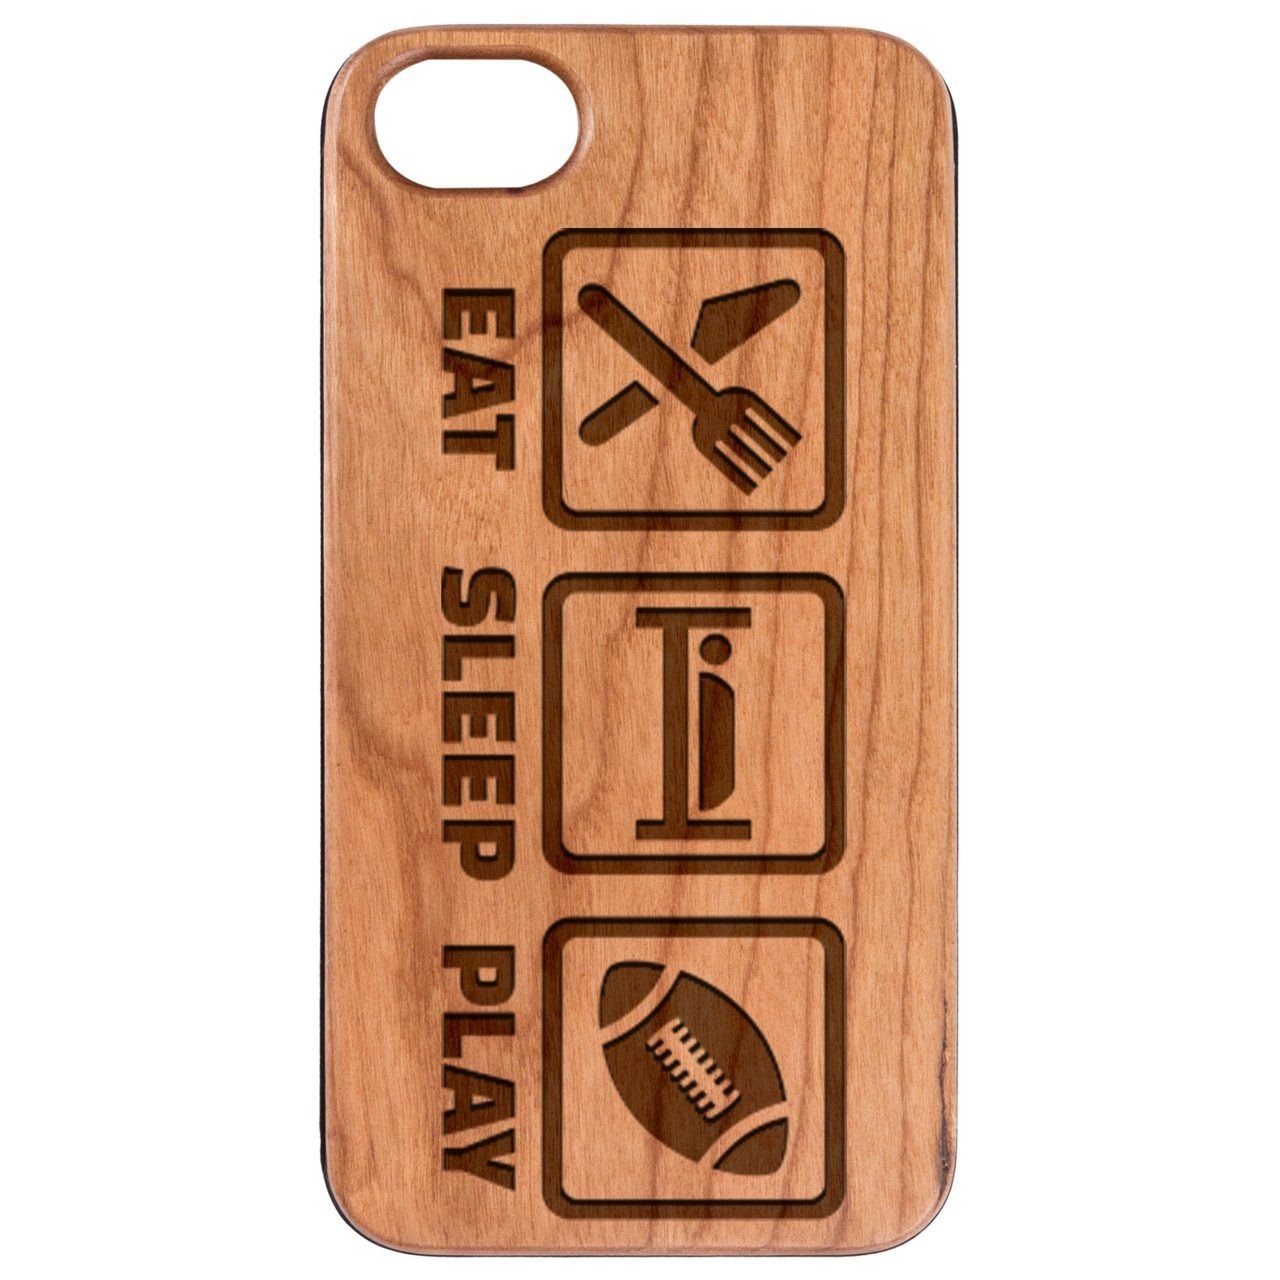 Eat Sleep Play - Engraved - Wooden Phone Case